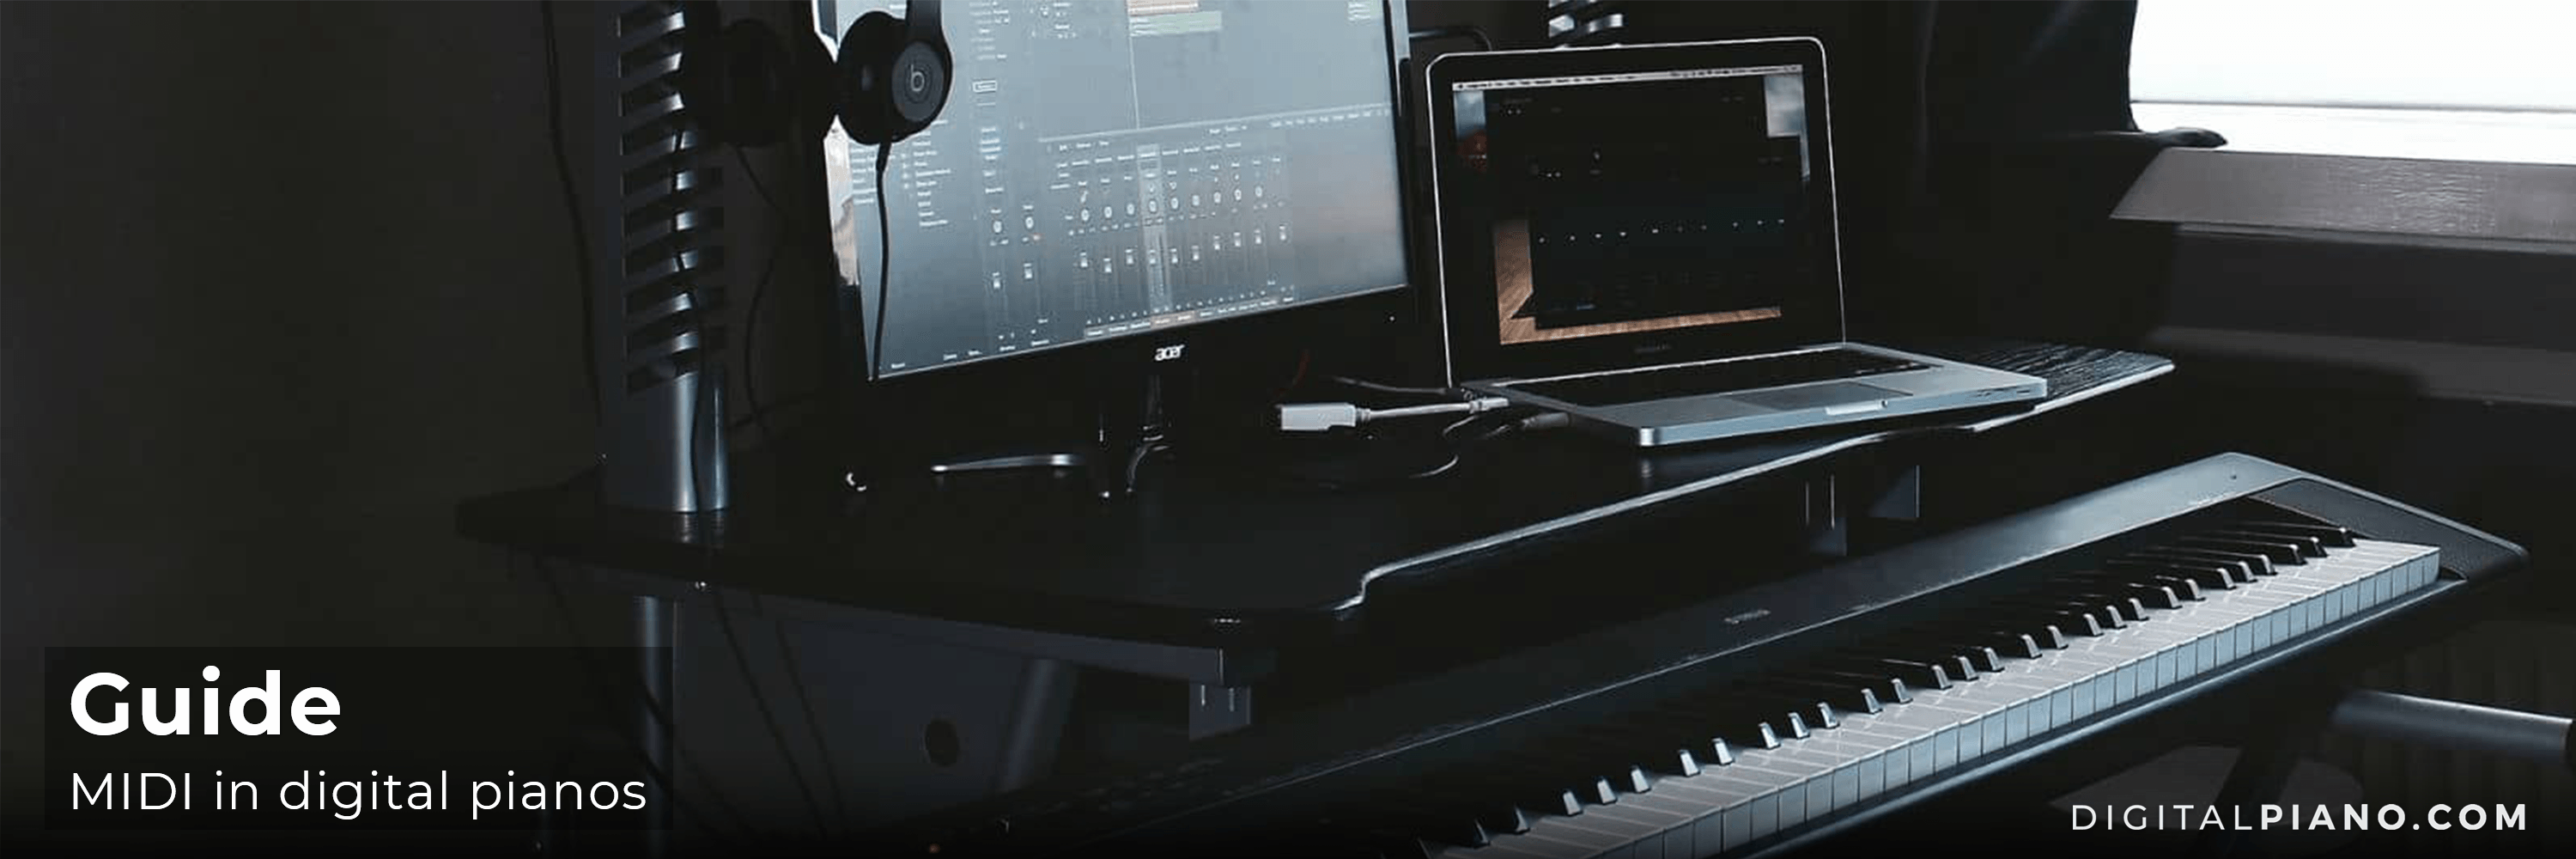 Guide to MIDI In Digital Pianos  | Danmarks største  udvalg af digitalpianoer, stagepianoer, digital flygler og keyboards